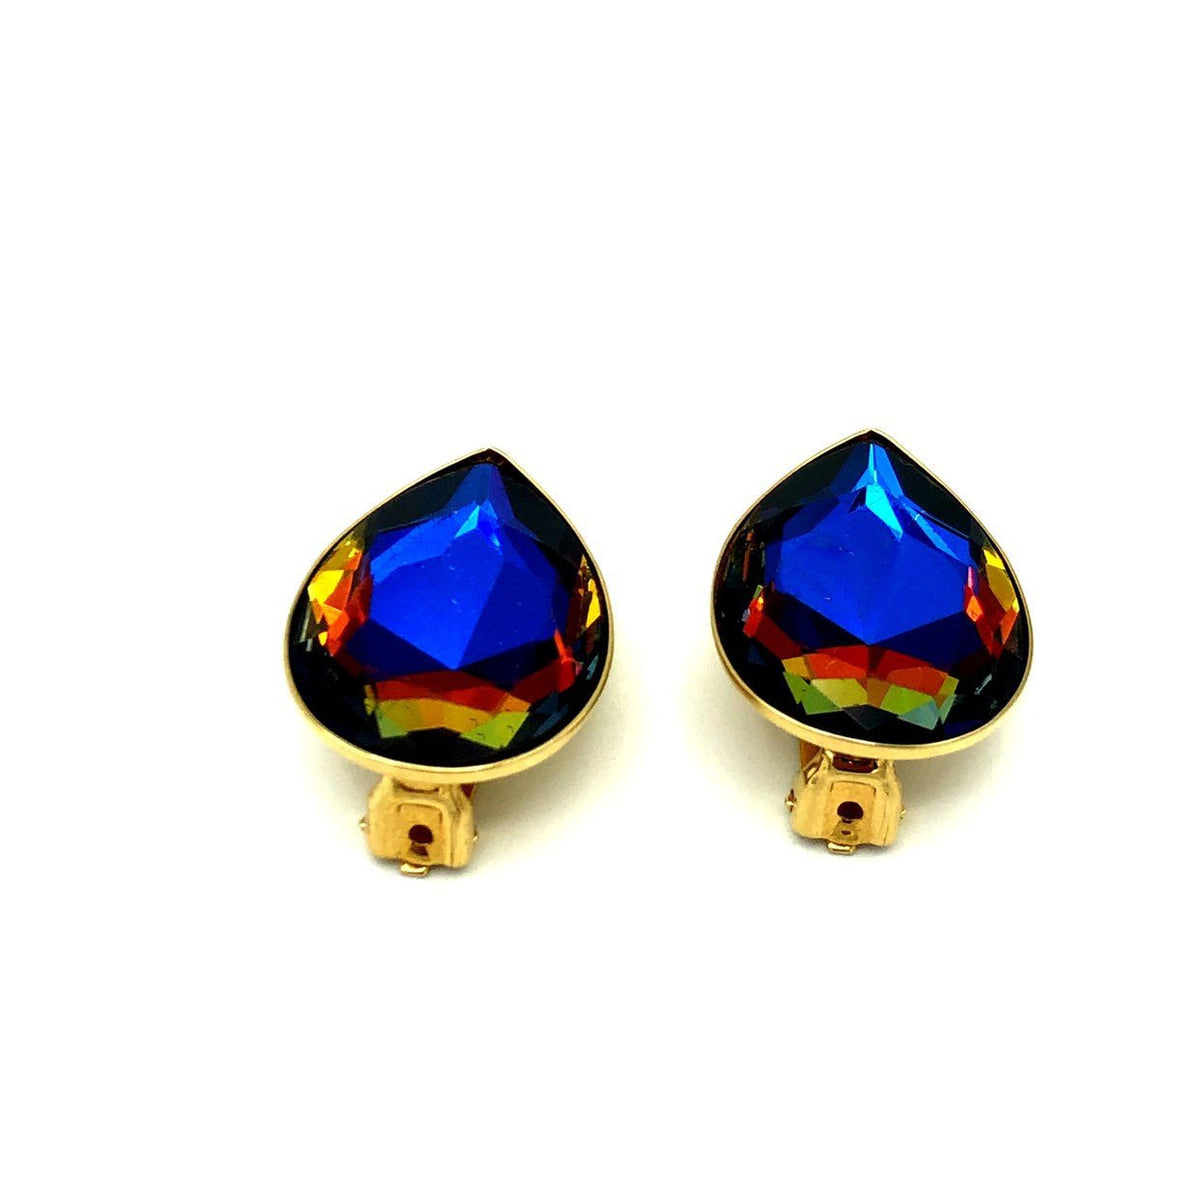 Stunning Blue Teardrop Vintage Rhinestone Clip-On Earrings - 24 Wishes Vintage Jewelry